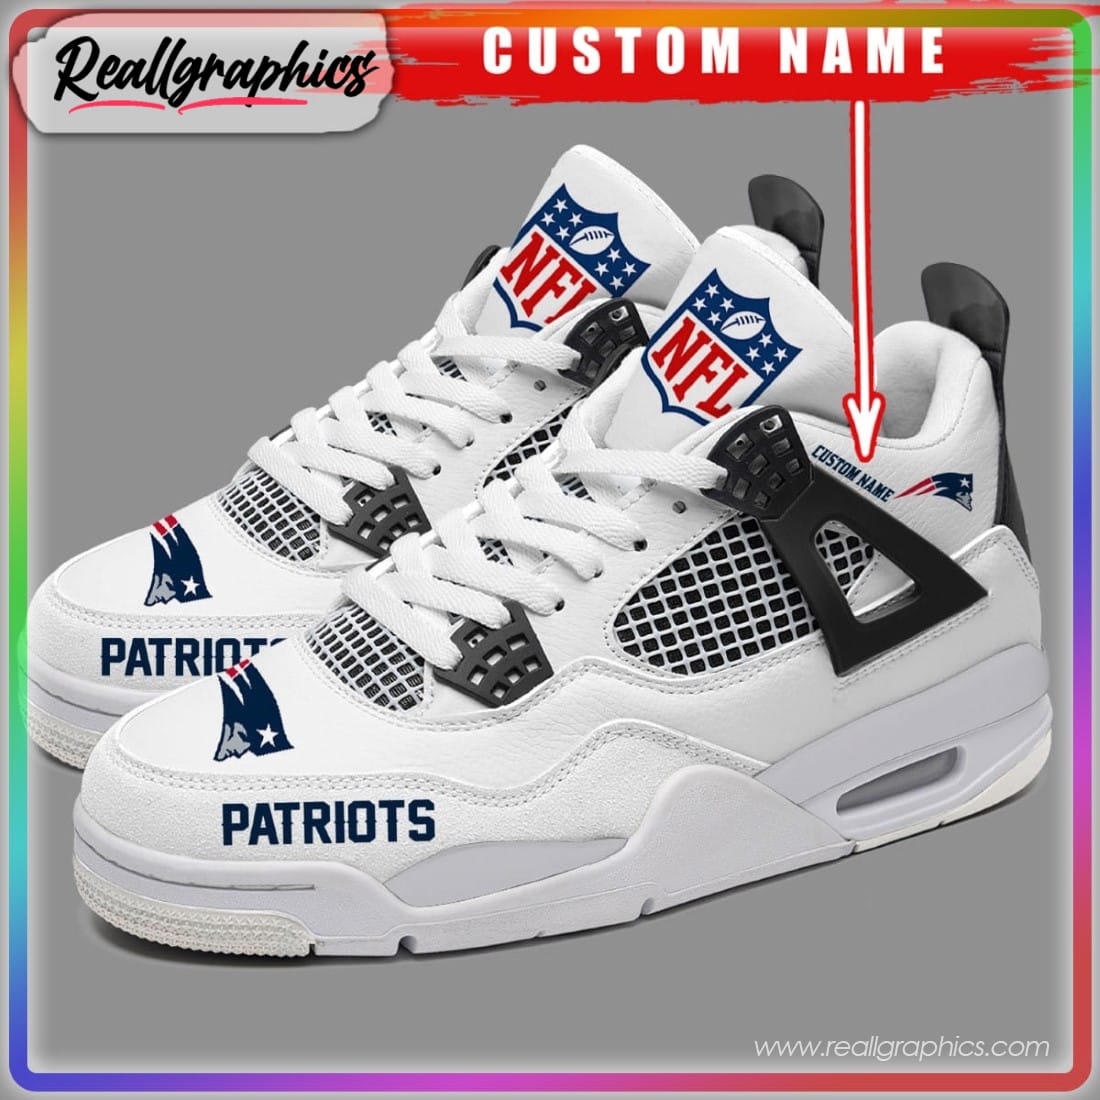 New England Patriots Camouflage Custom Jordan 4 Sneaker